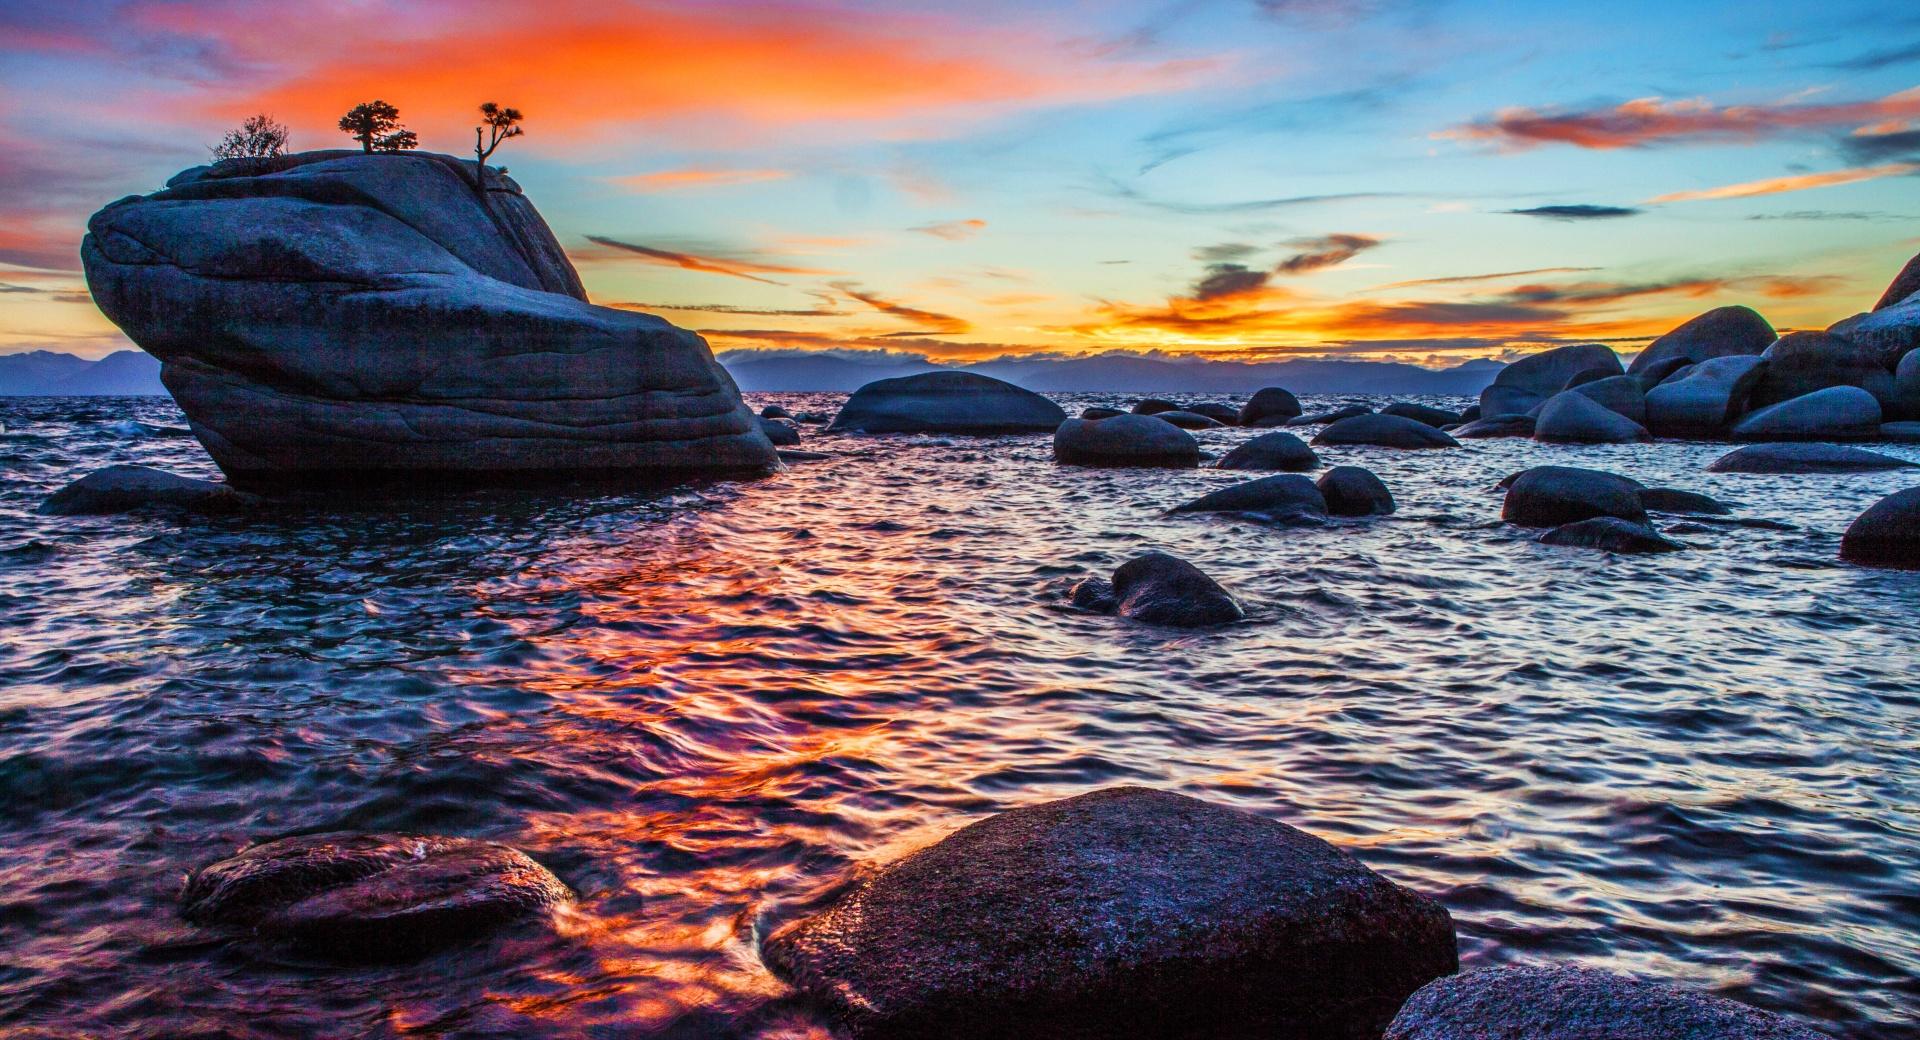 Bonsai Rock Sunset at Lake Tahoe at 1600 x 1200 size wallpapers HD quality